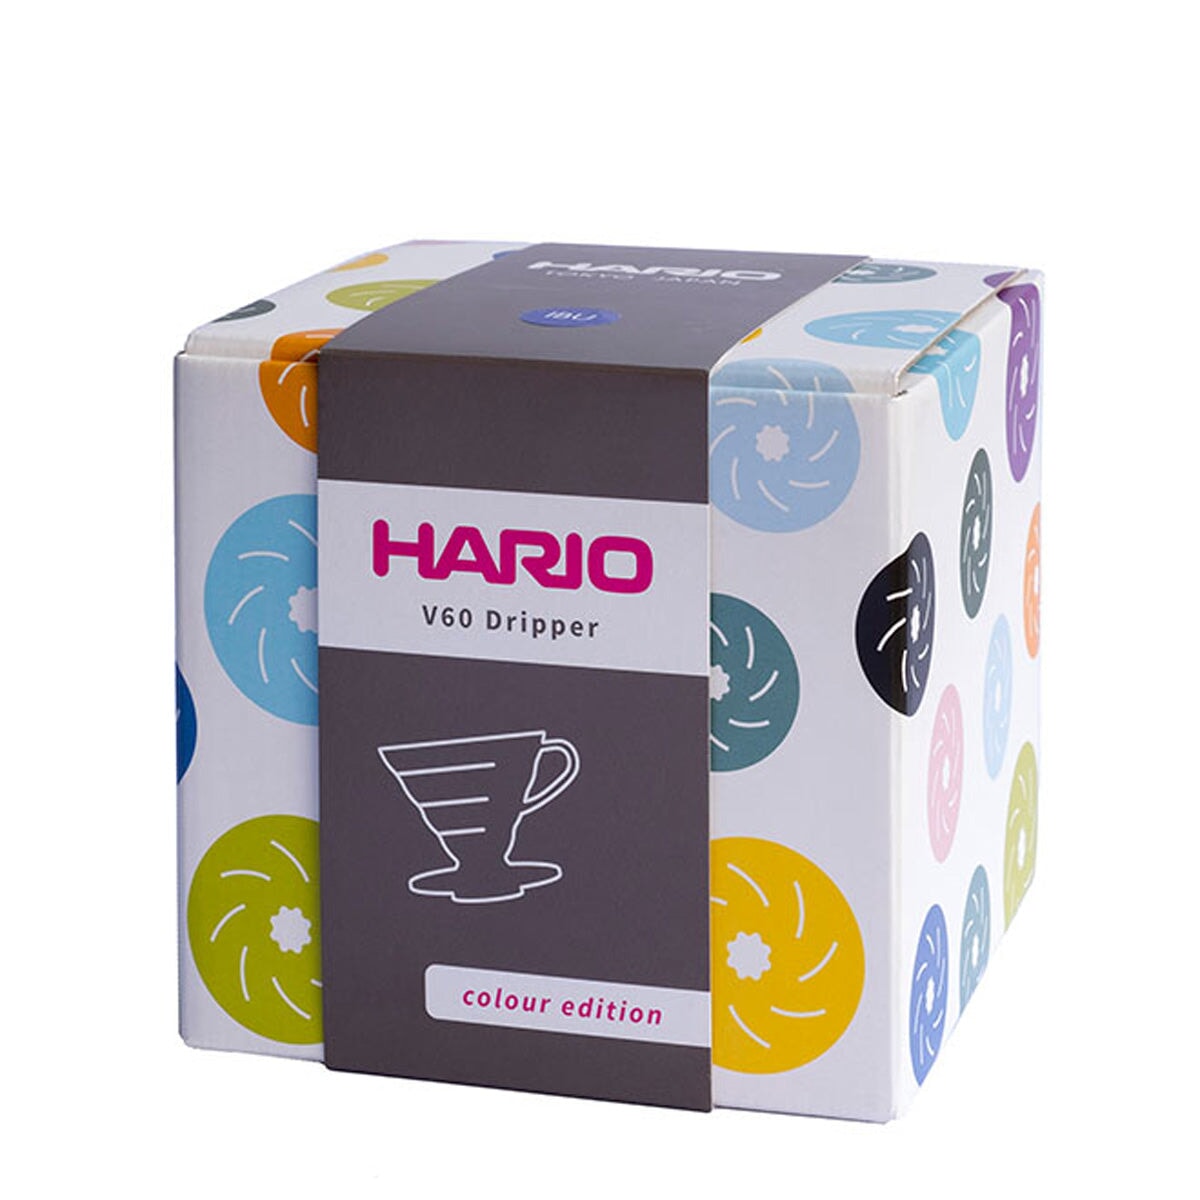 Hario V60 Dripper "Colour Edition" - Light Blue Hario 